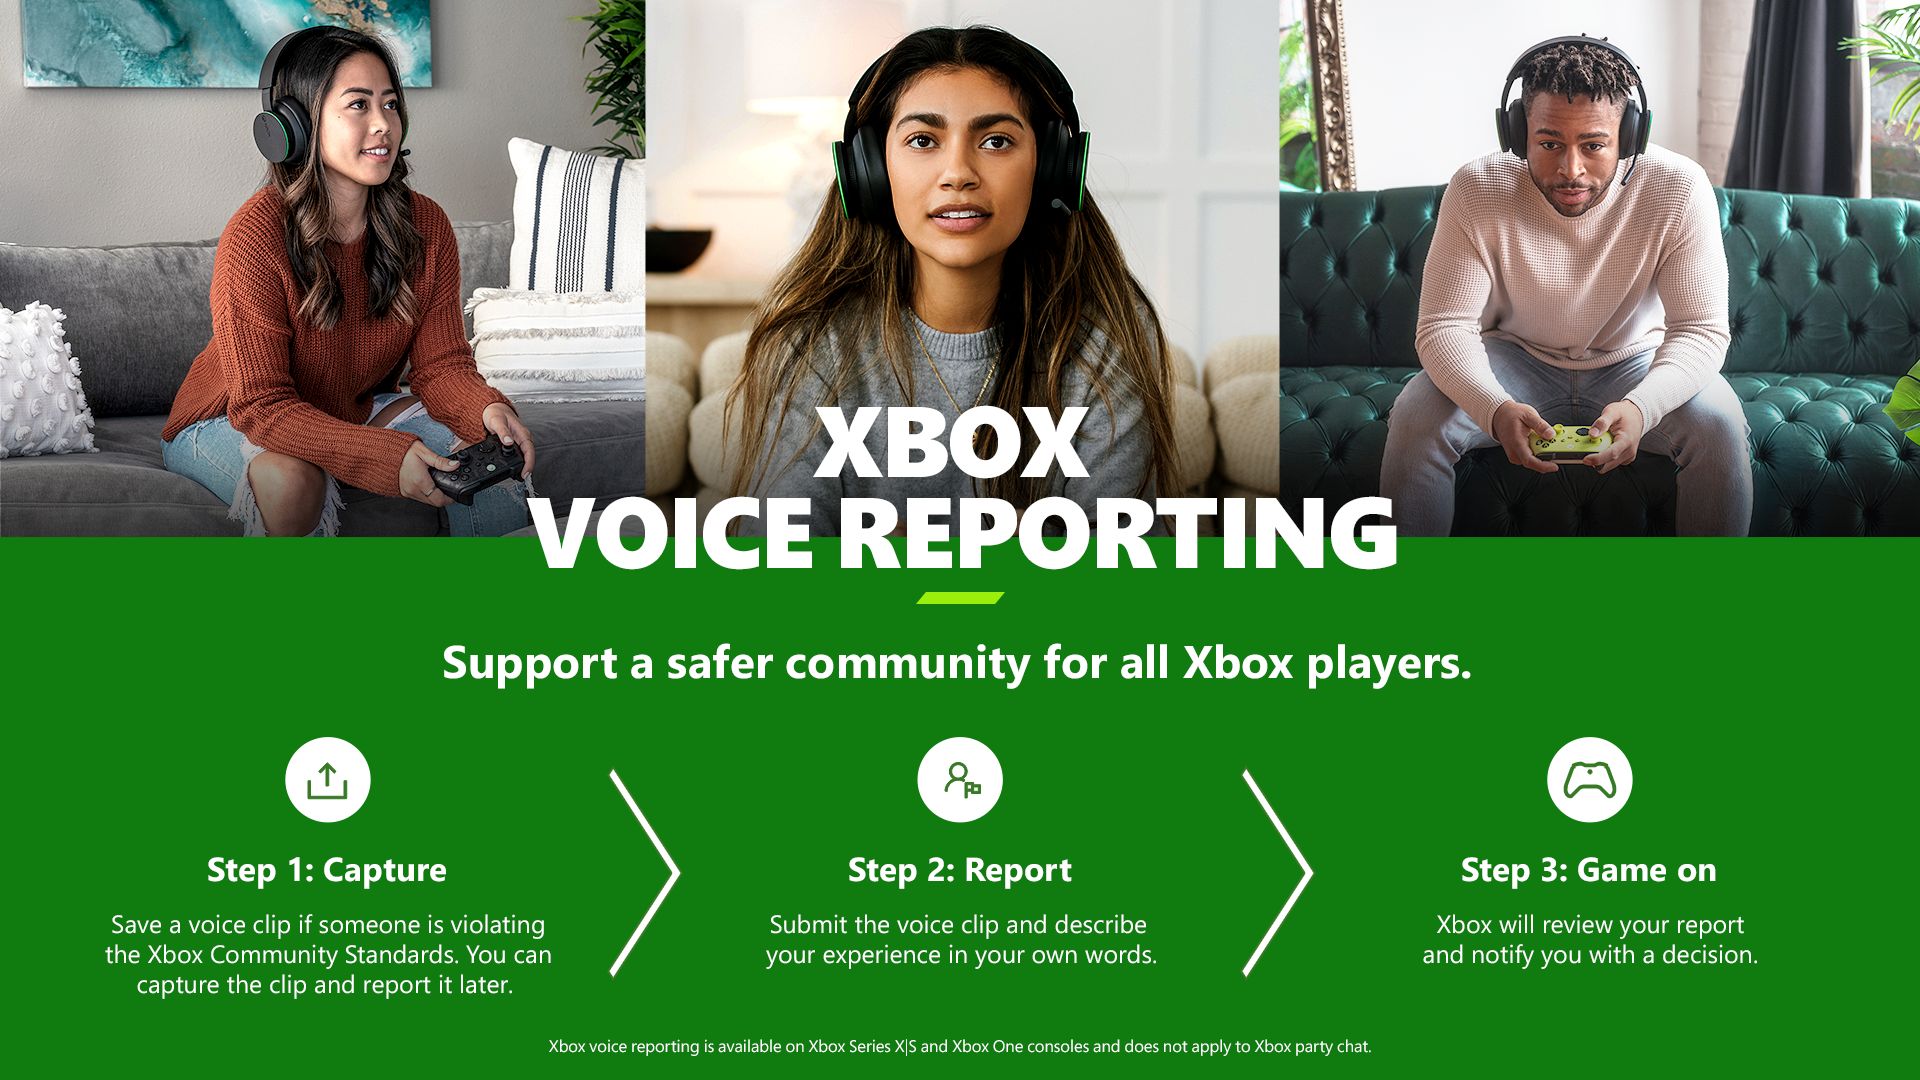 06_Xbox_Voice_Reporting-22d927ba80dc886661d9.jpg